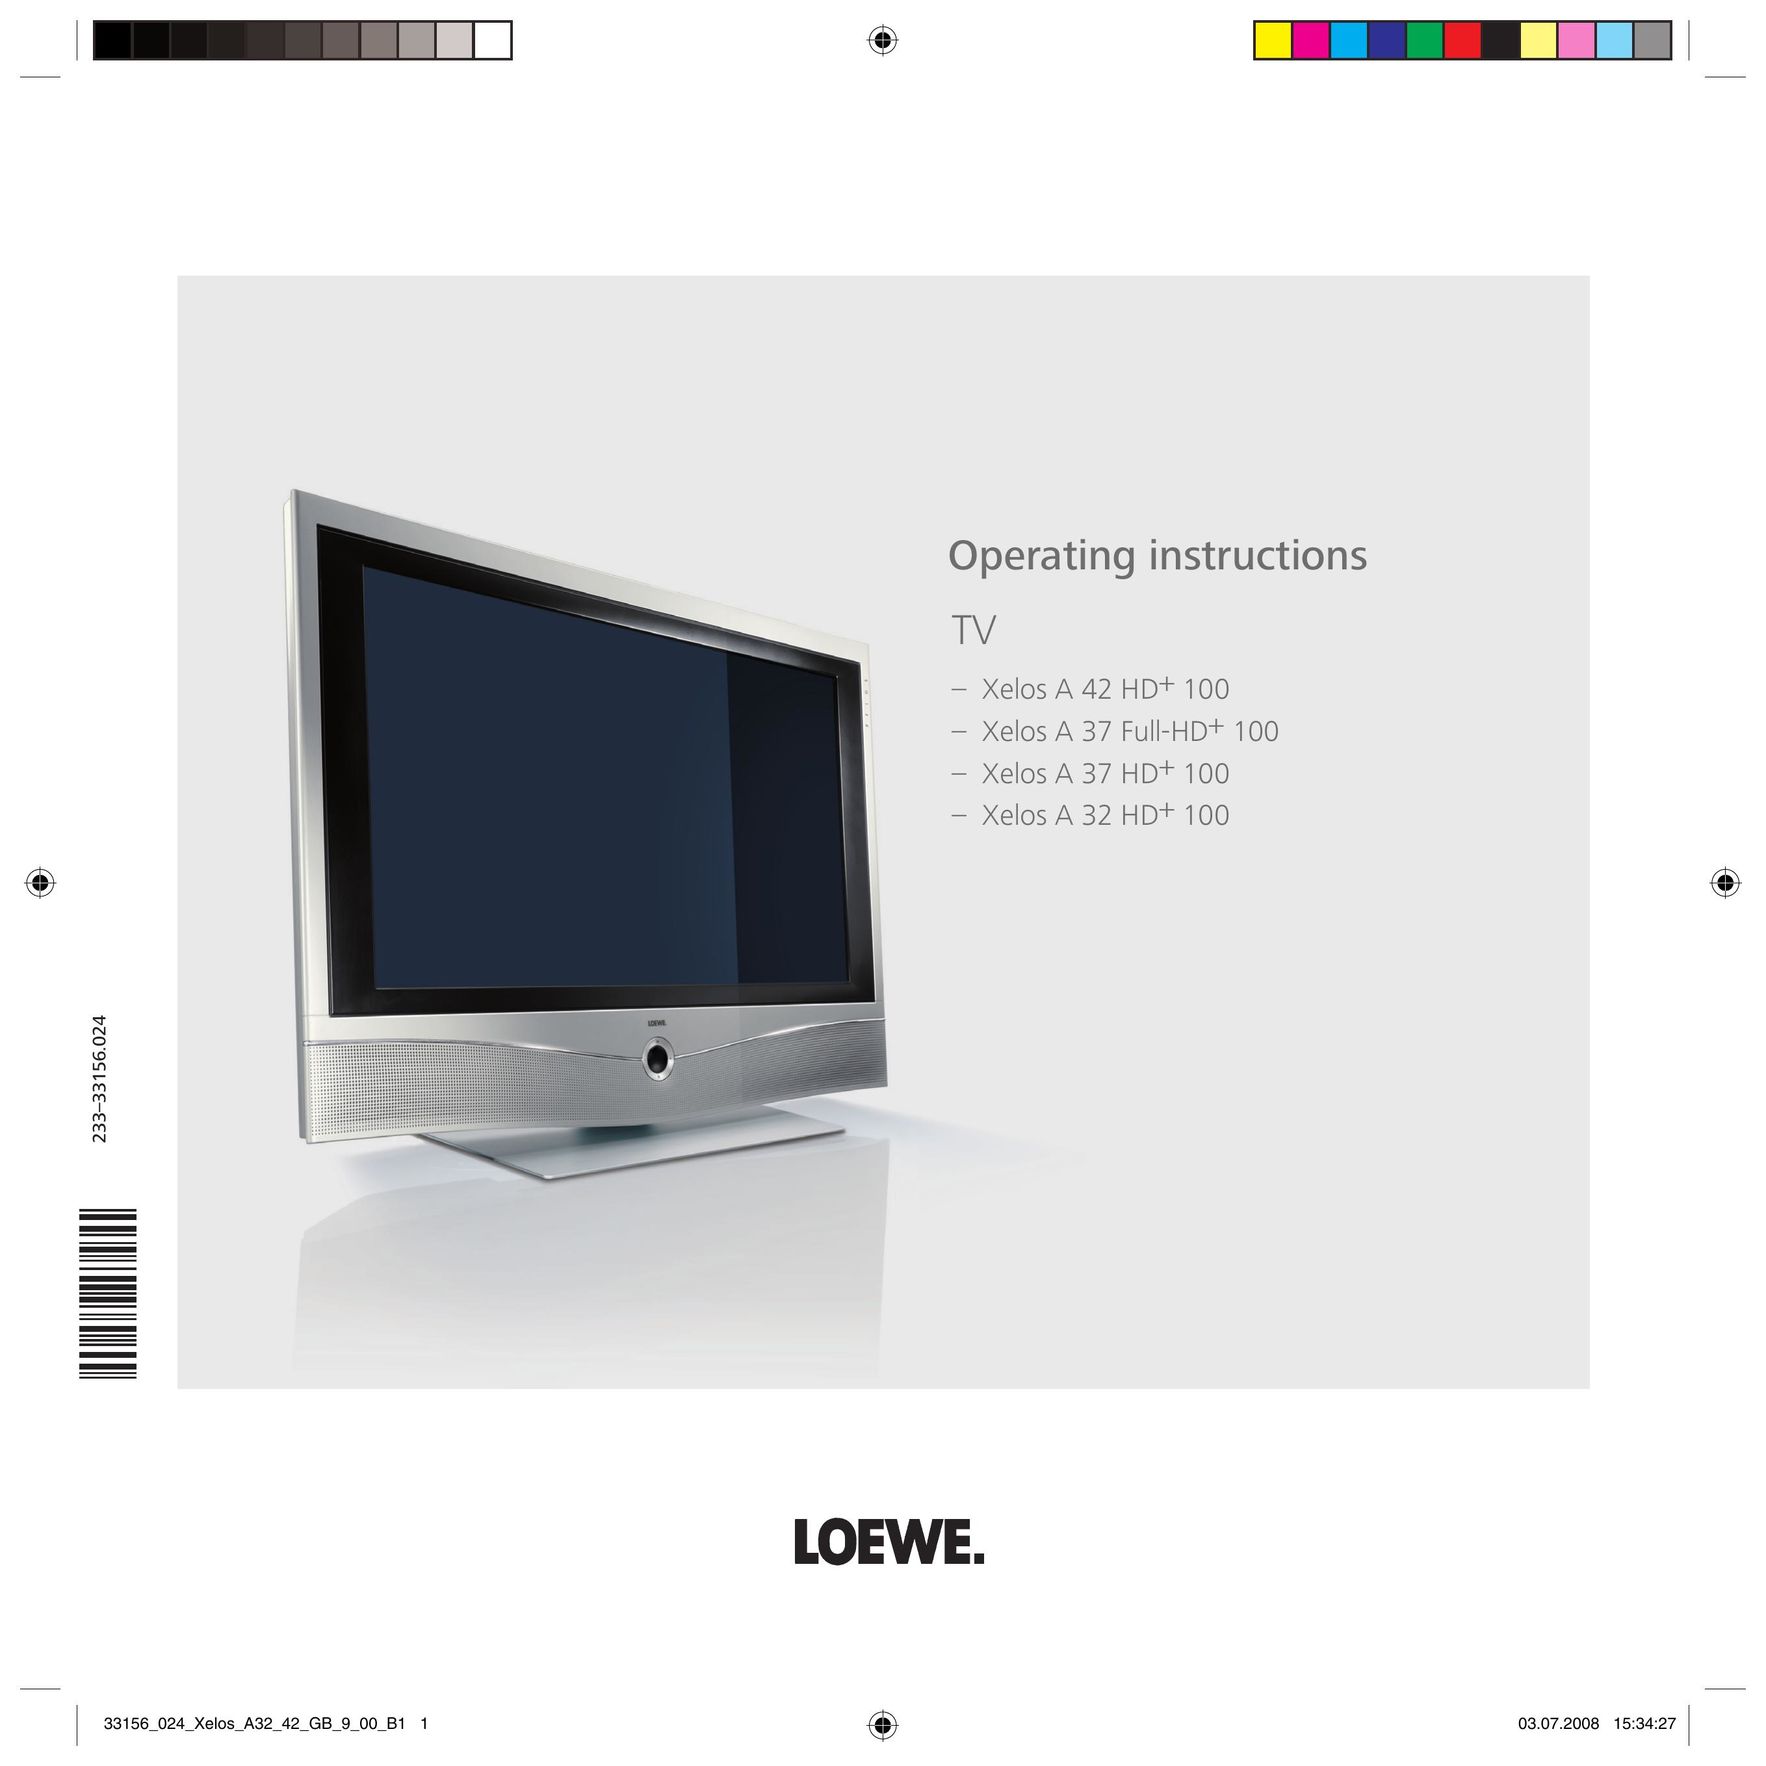 Loewe A 42 HD+ 100, A 37 Full-HD+ 100, A 37 HD+ 100, A 32 HD+ 100 Flat Panel Television User Manual